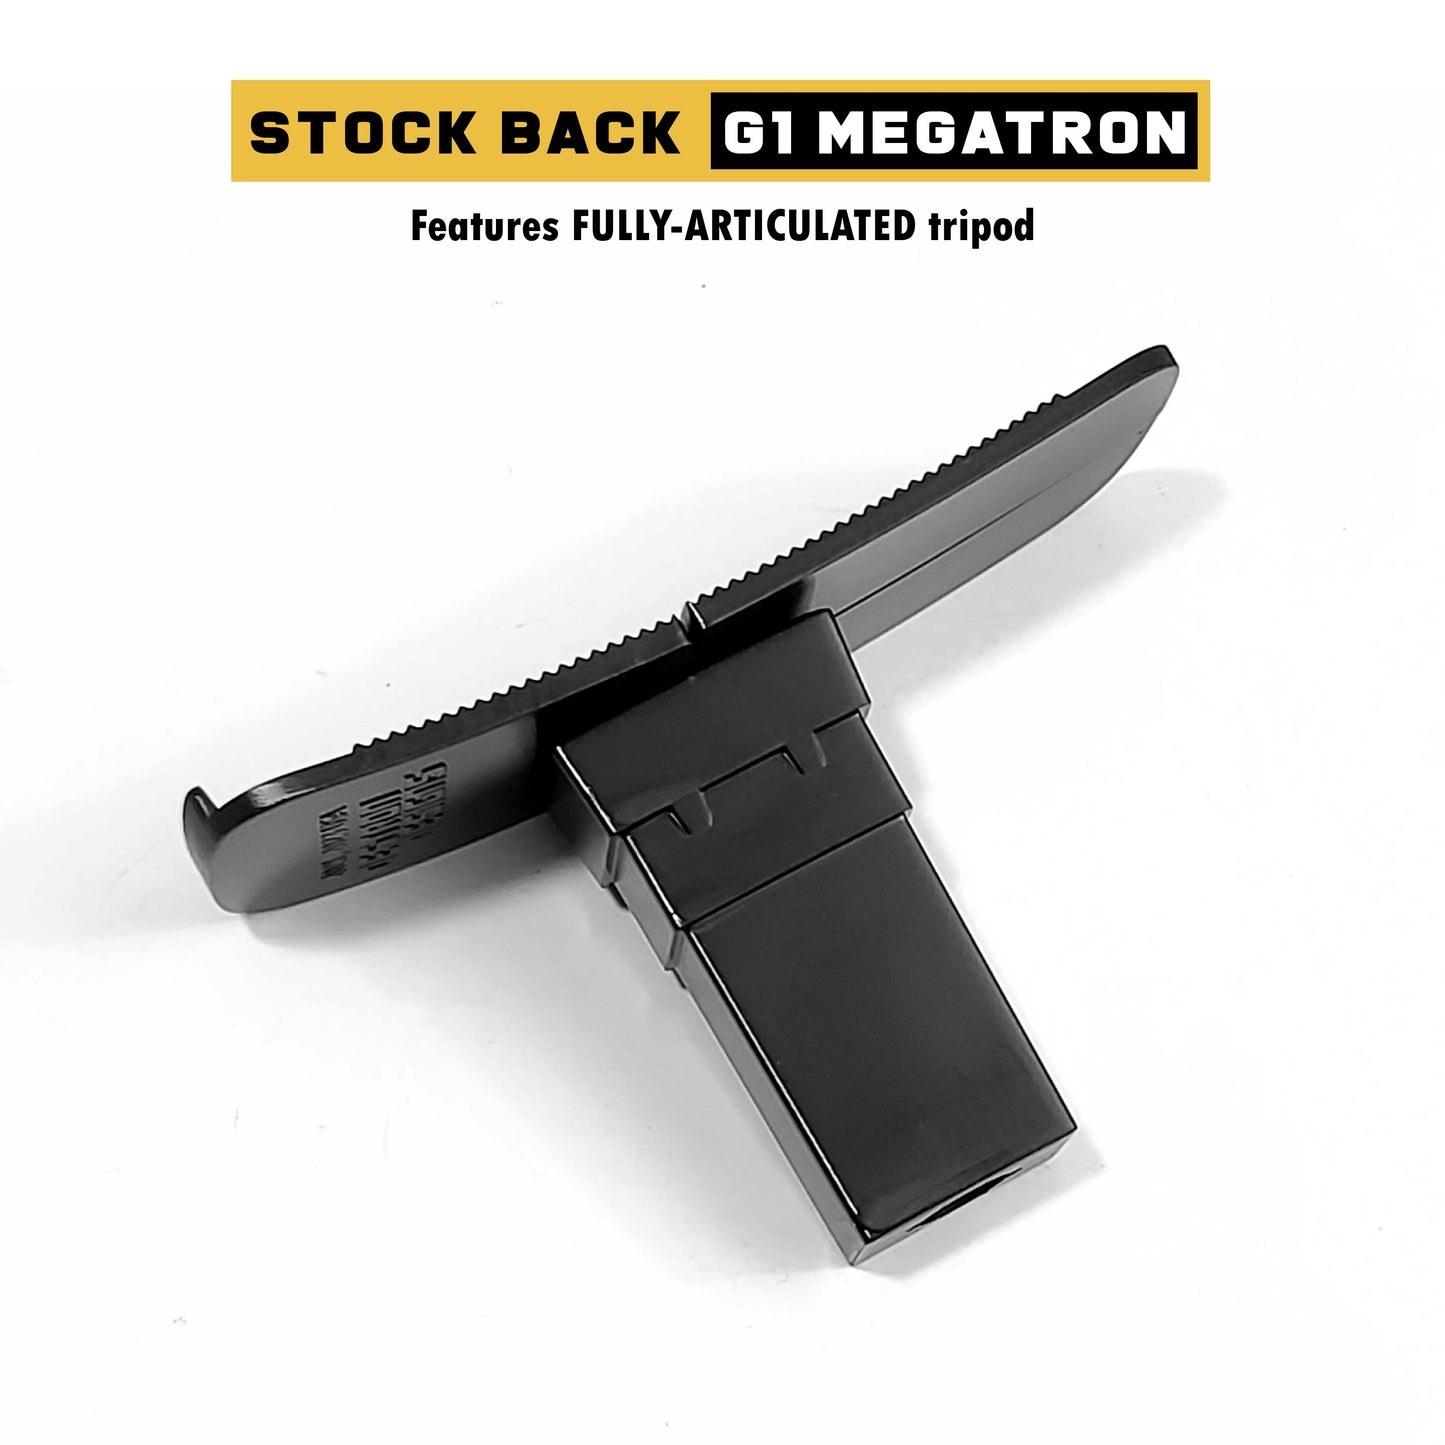 Stock Back Part for G1 Megatron